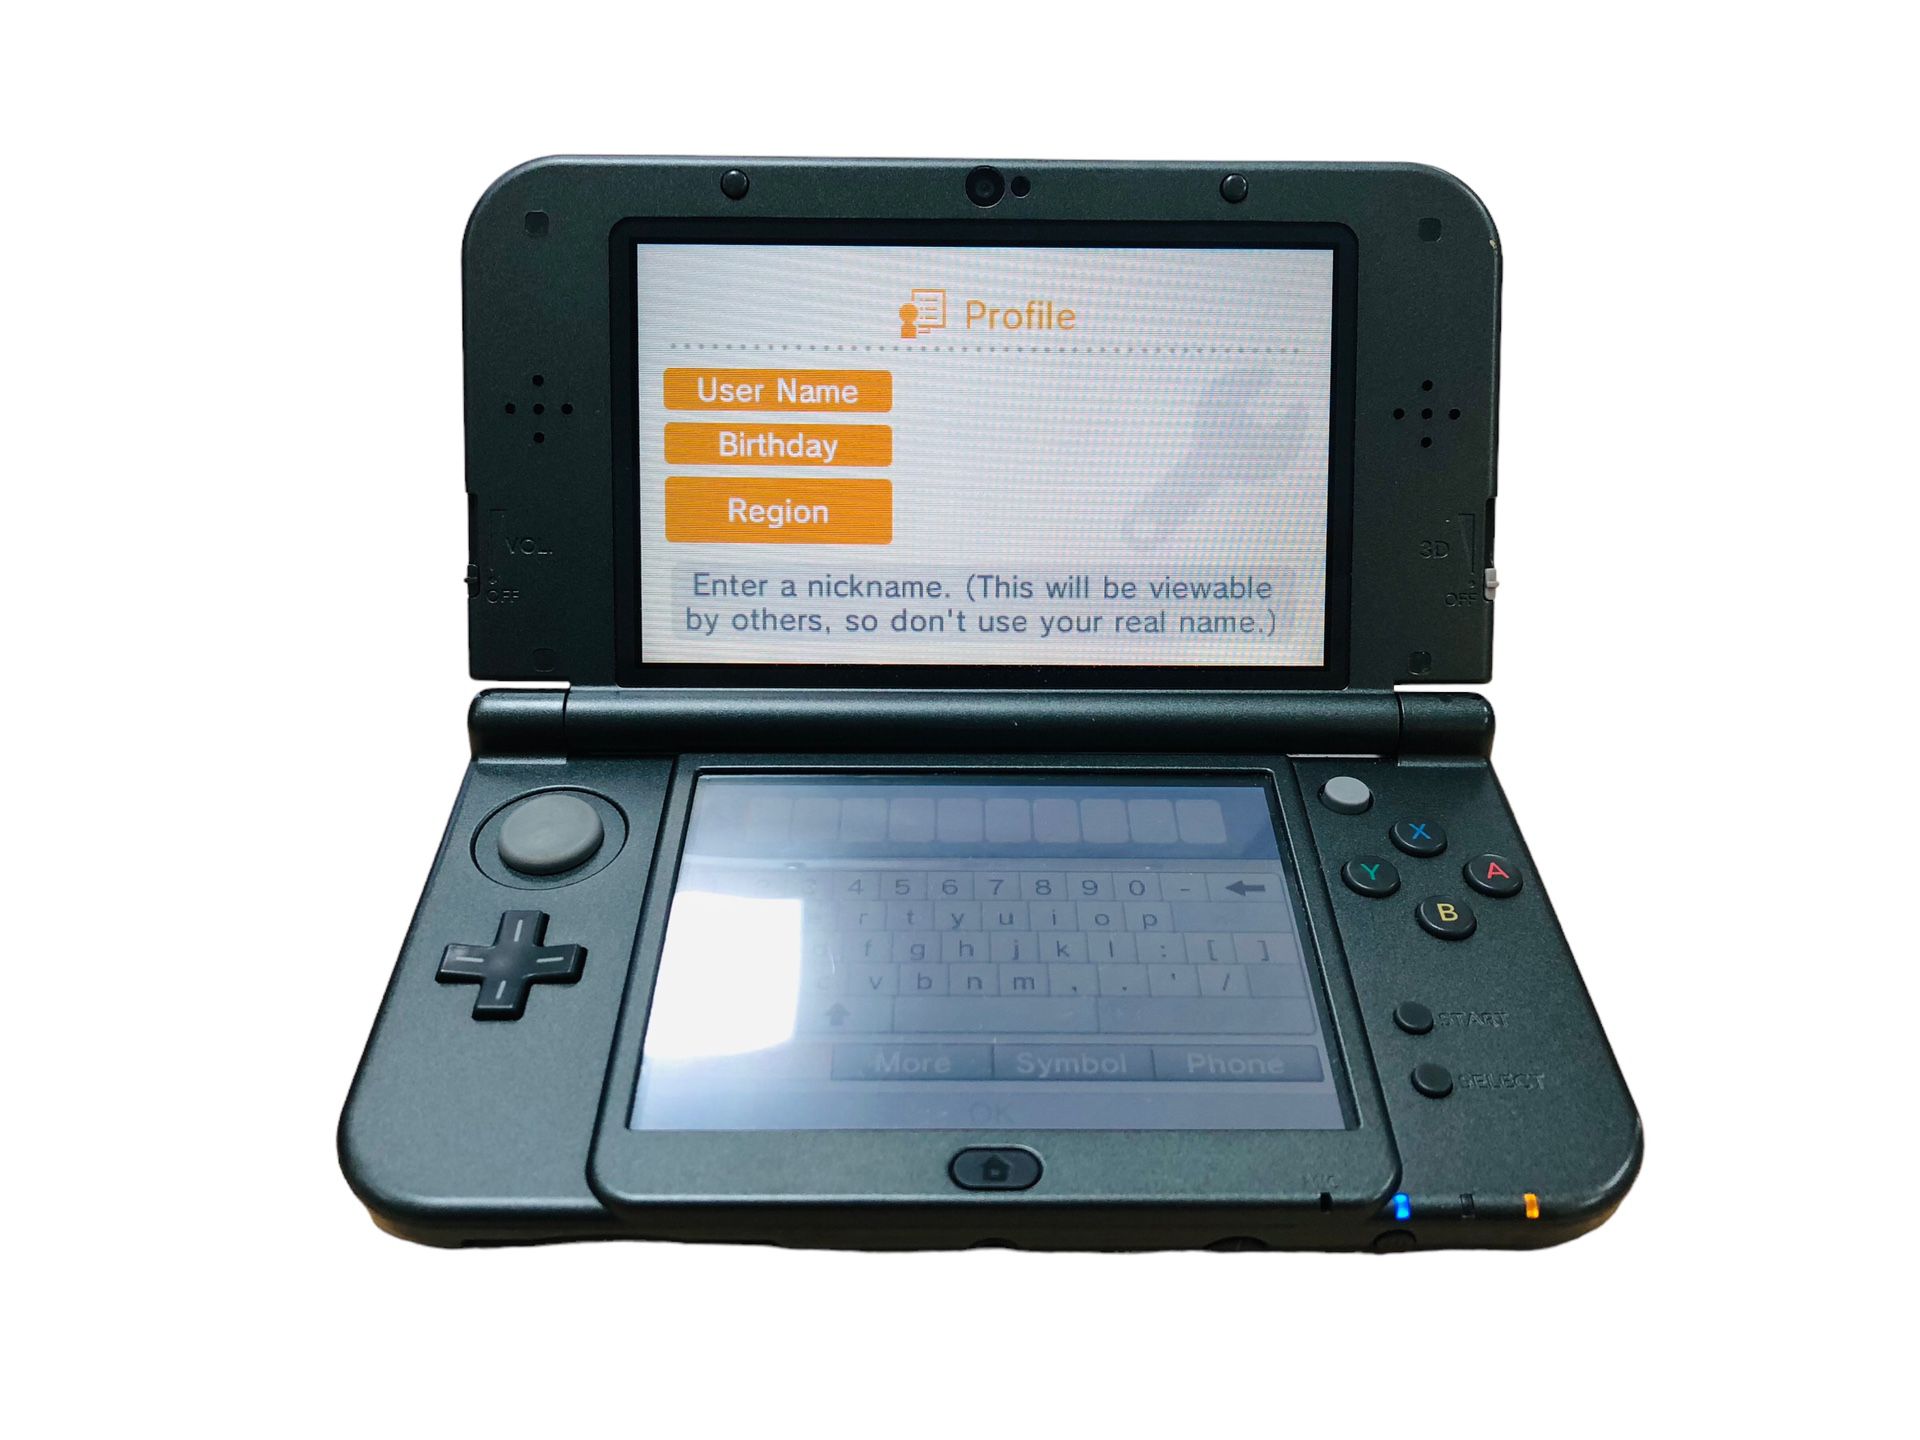 Nintendo 3DS XL